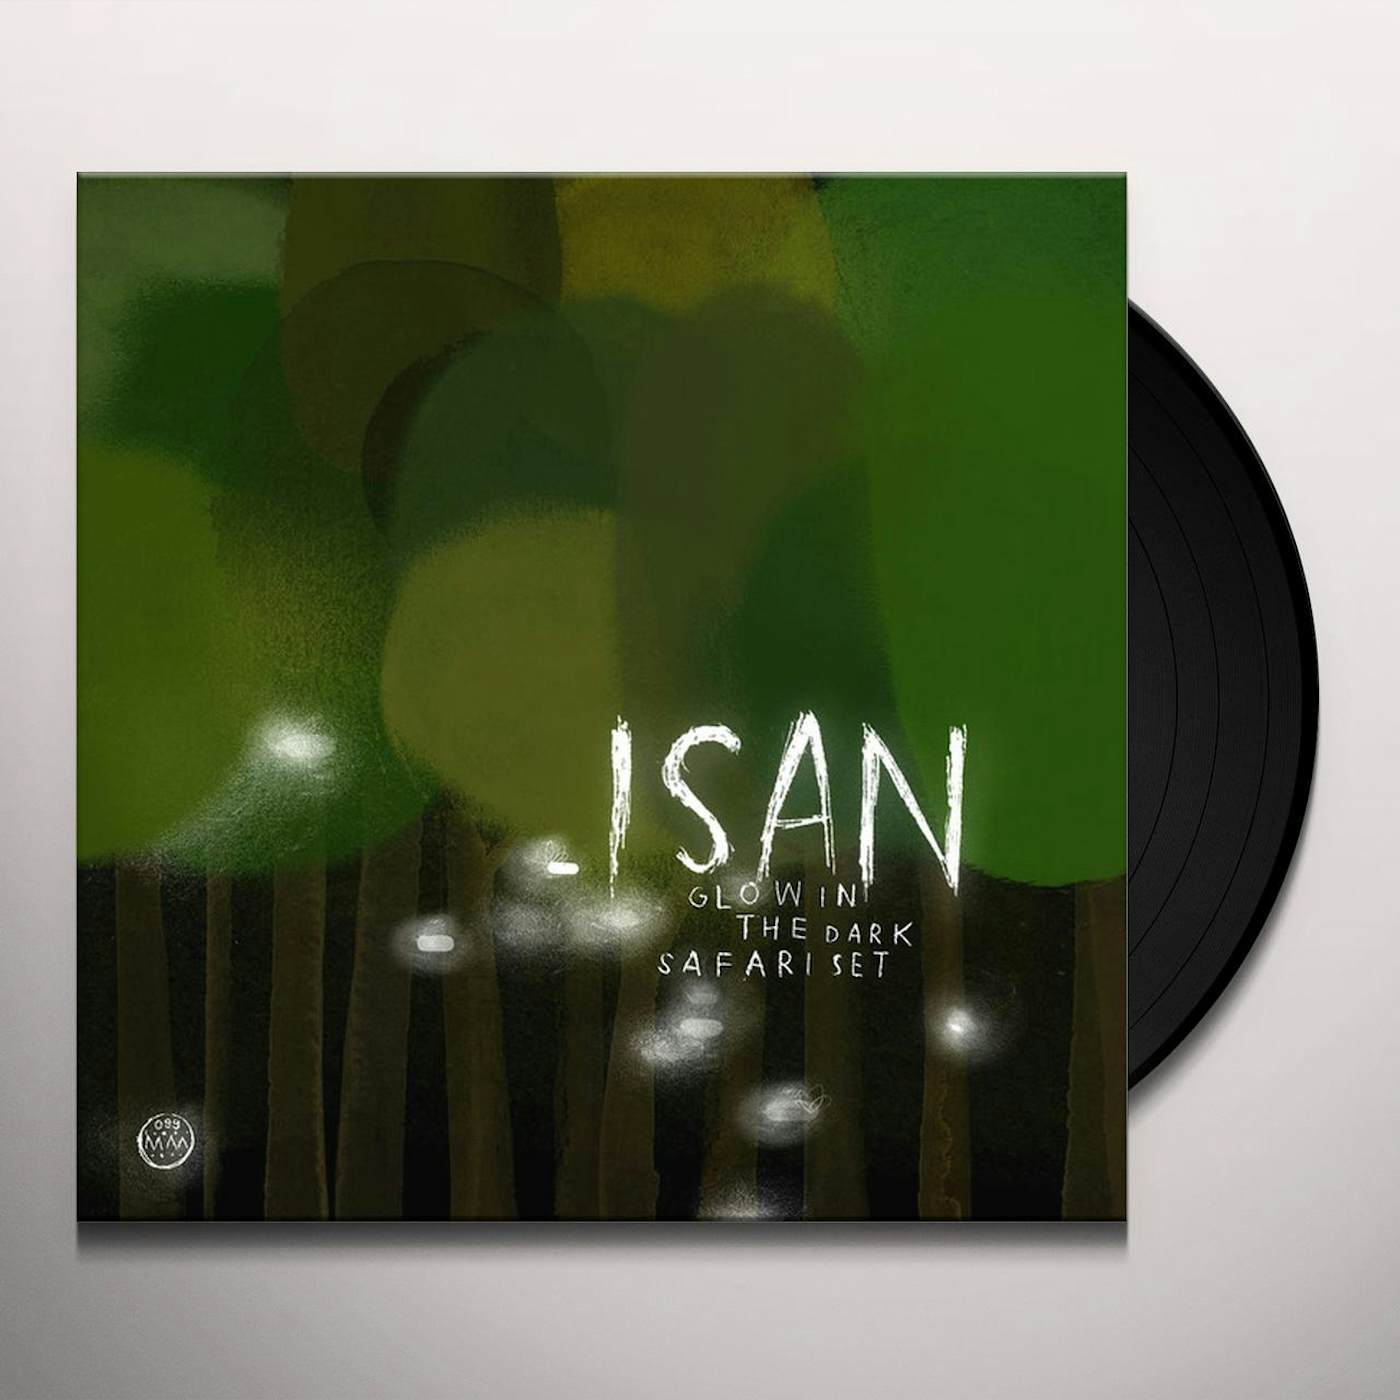 Isan Glow In The Dark Safari Set Vinyl Record